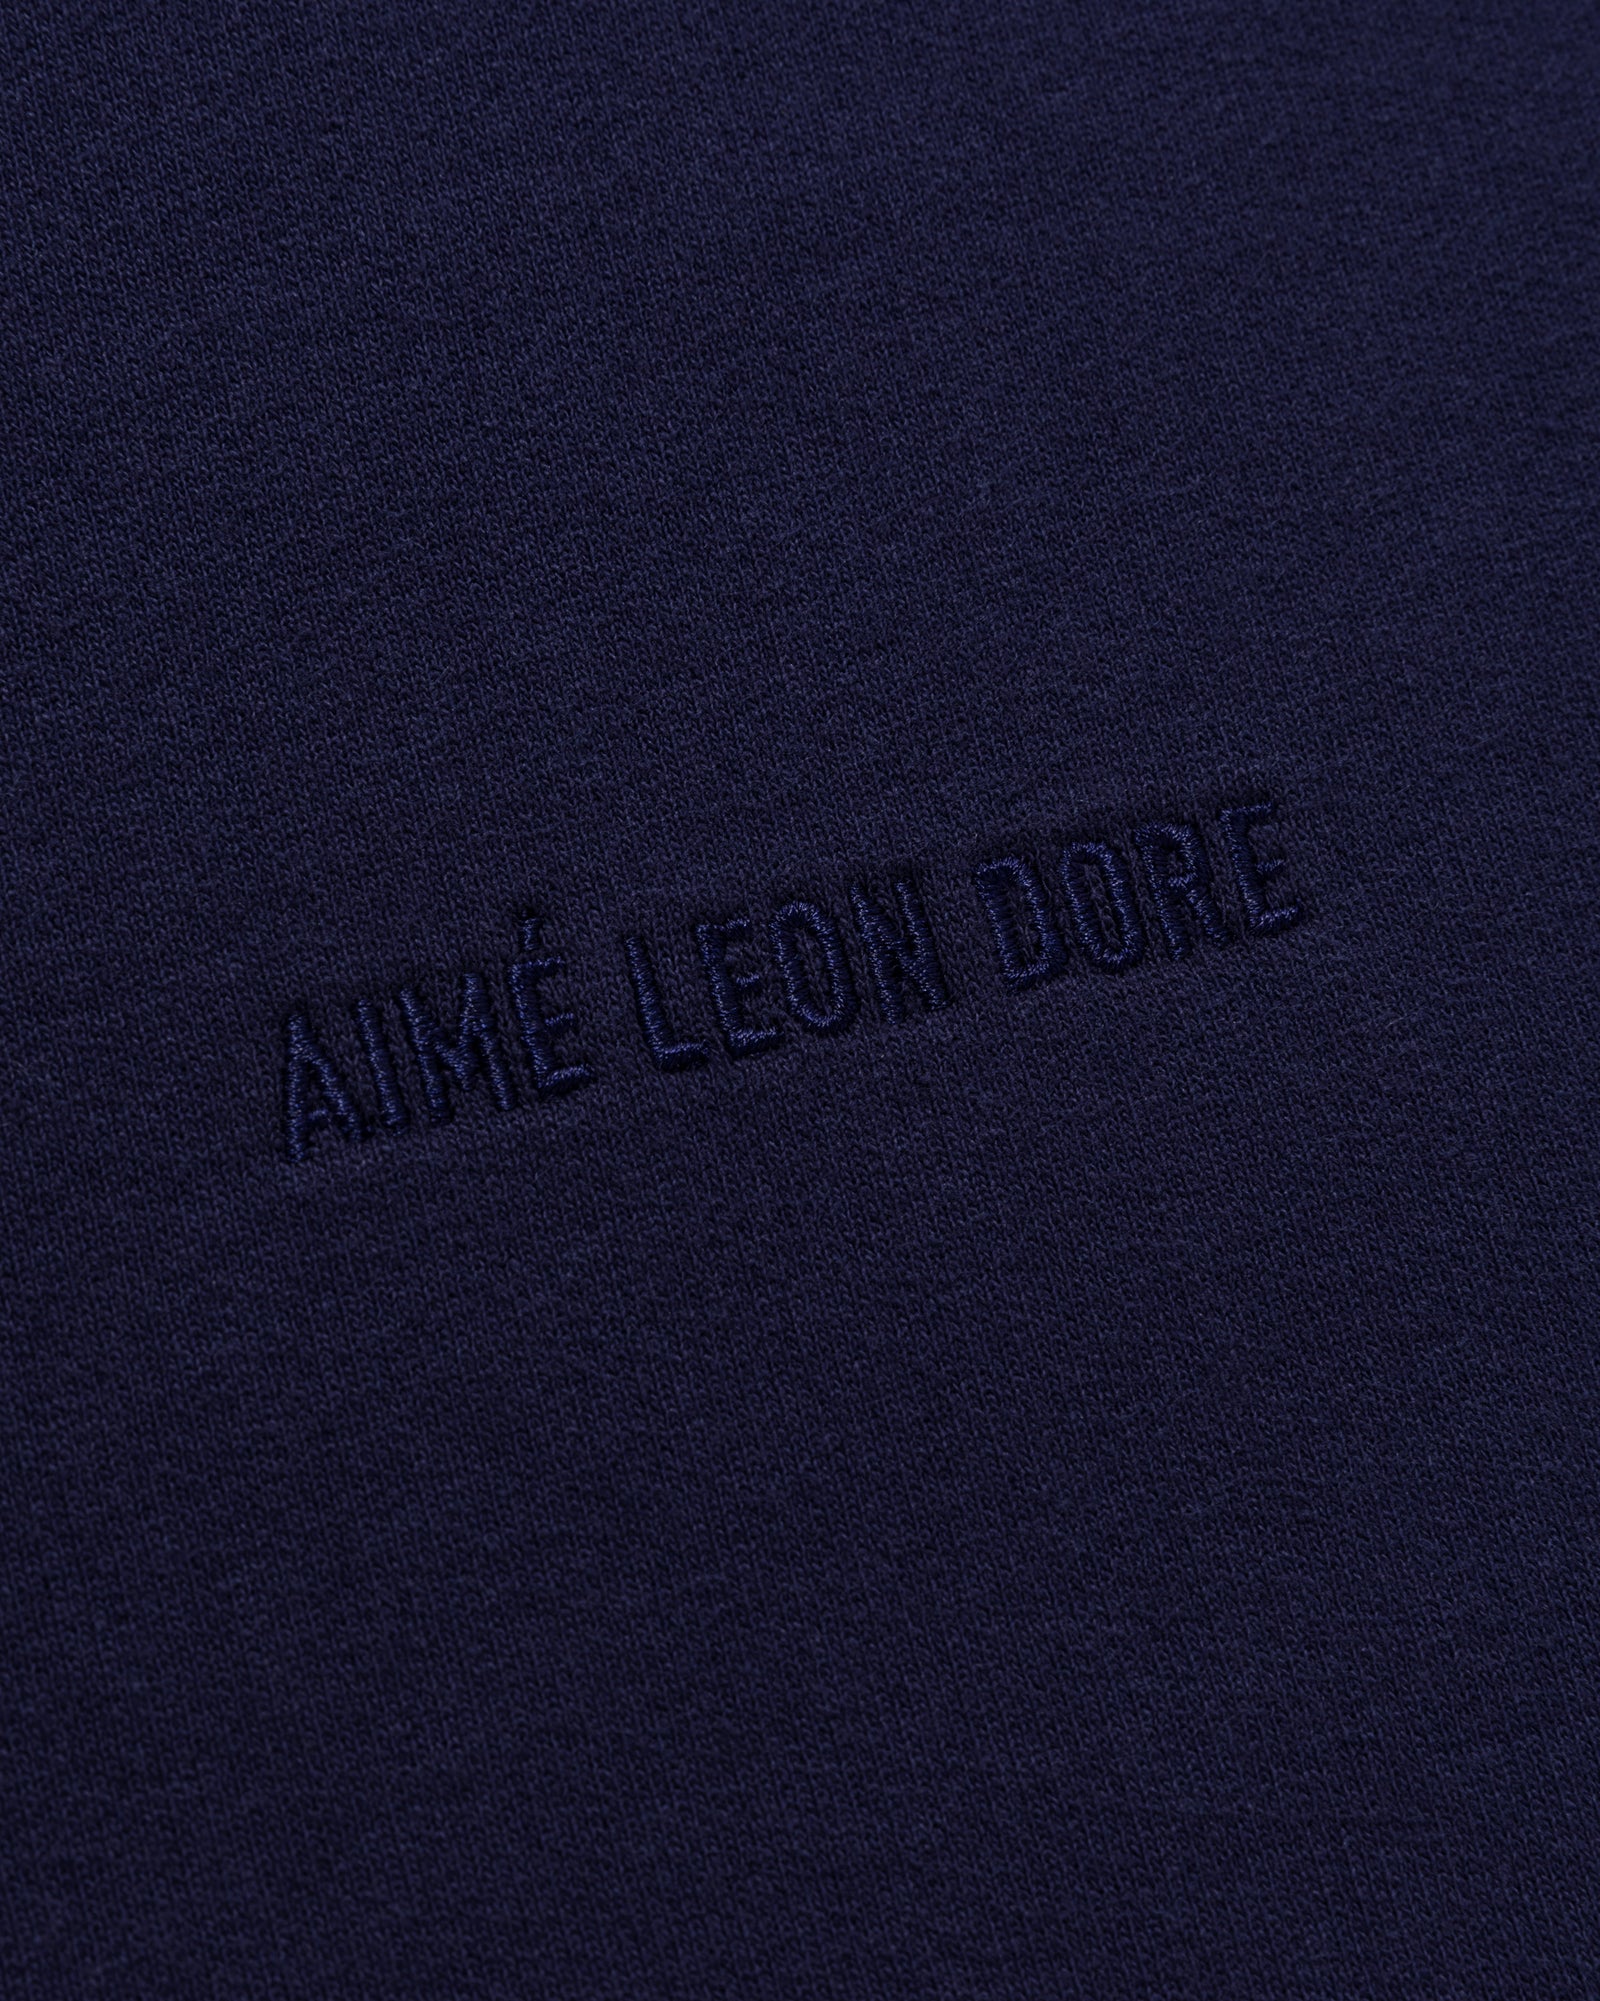 Aime Leon dore Tonal Logo Crewneck Sweat